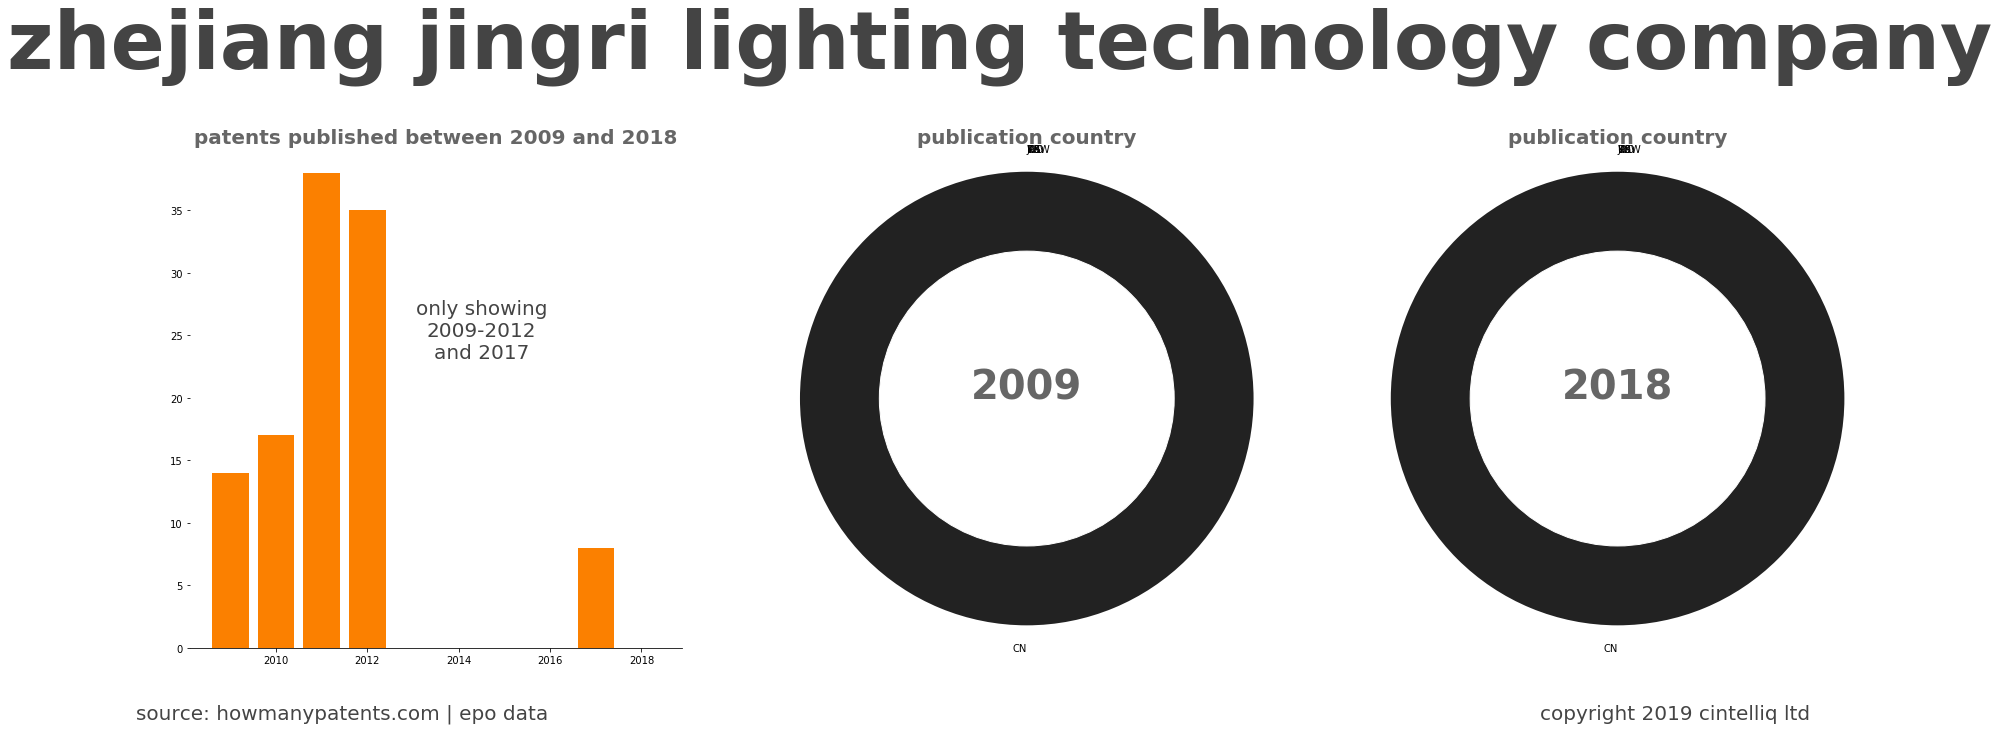 summary of patents for Zhejiang Jingri Lighting Technology Company